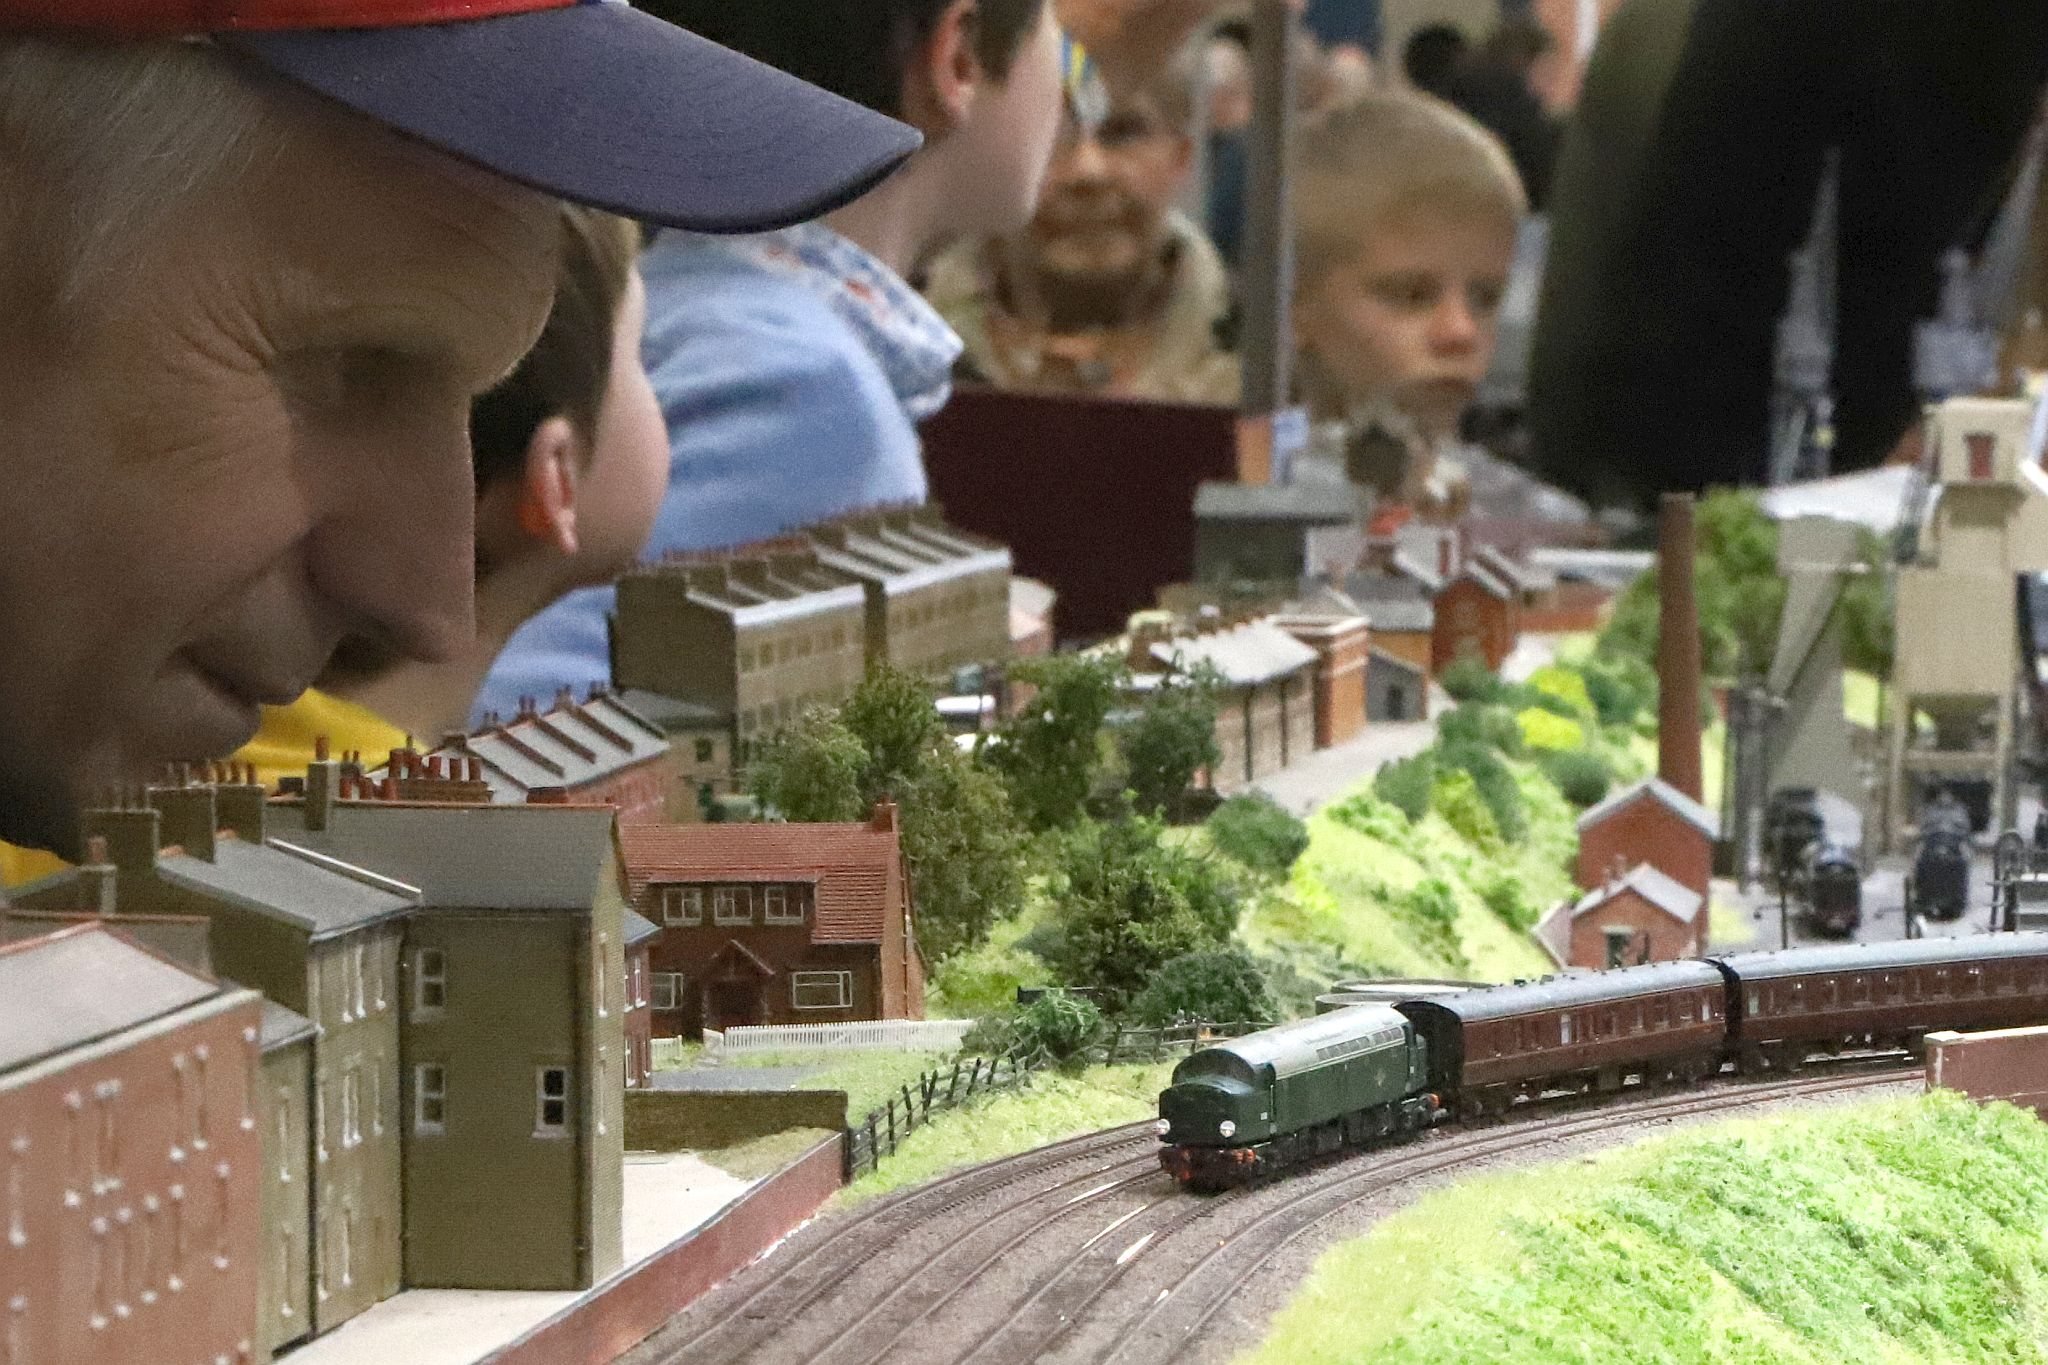 James Street N Gauge model railway layout. 2023 London Festival of Railway Modelling, Alexandra Palace, London